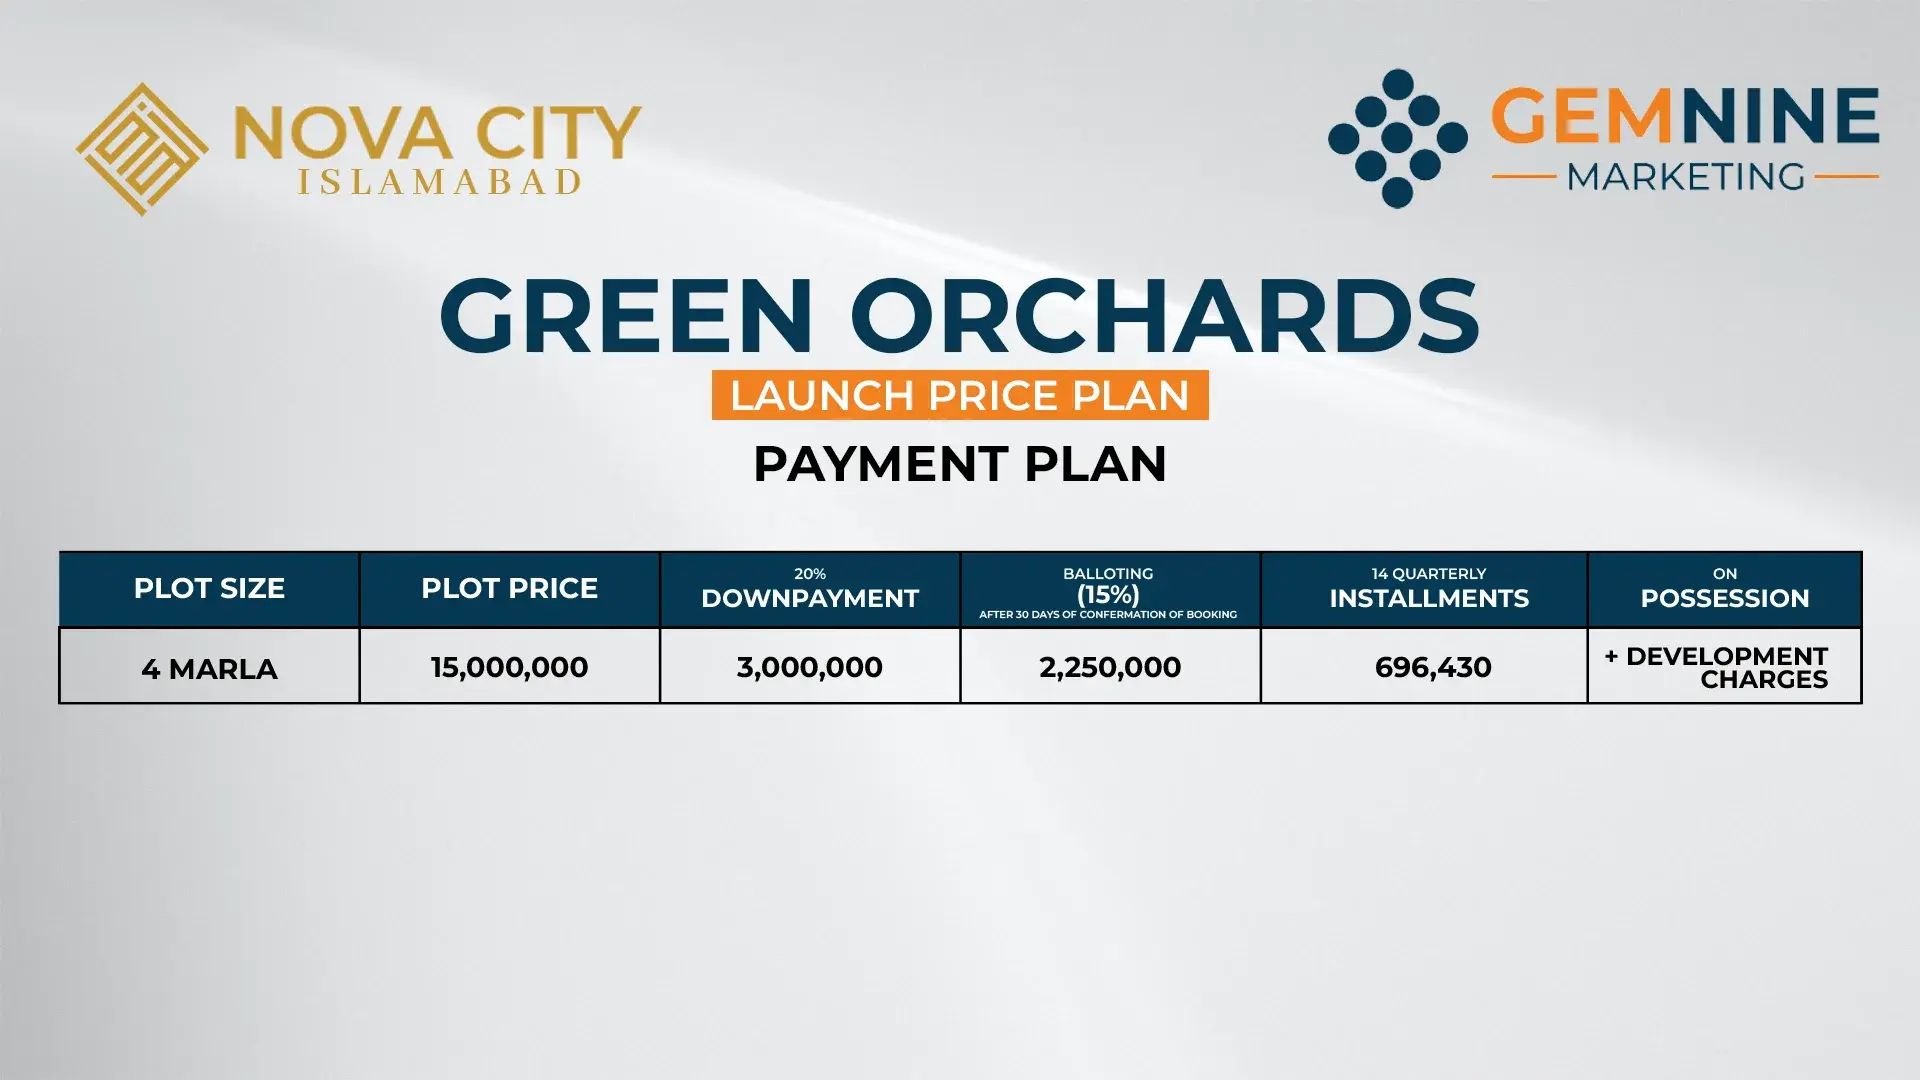 Nova City Green Orchards Payment Plan